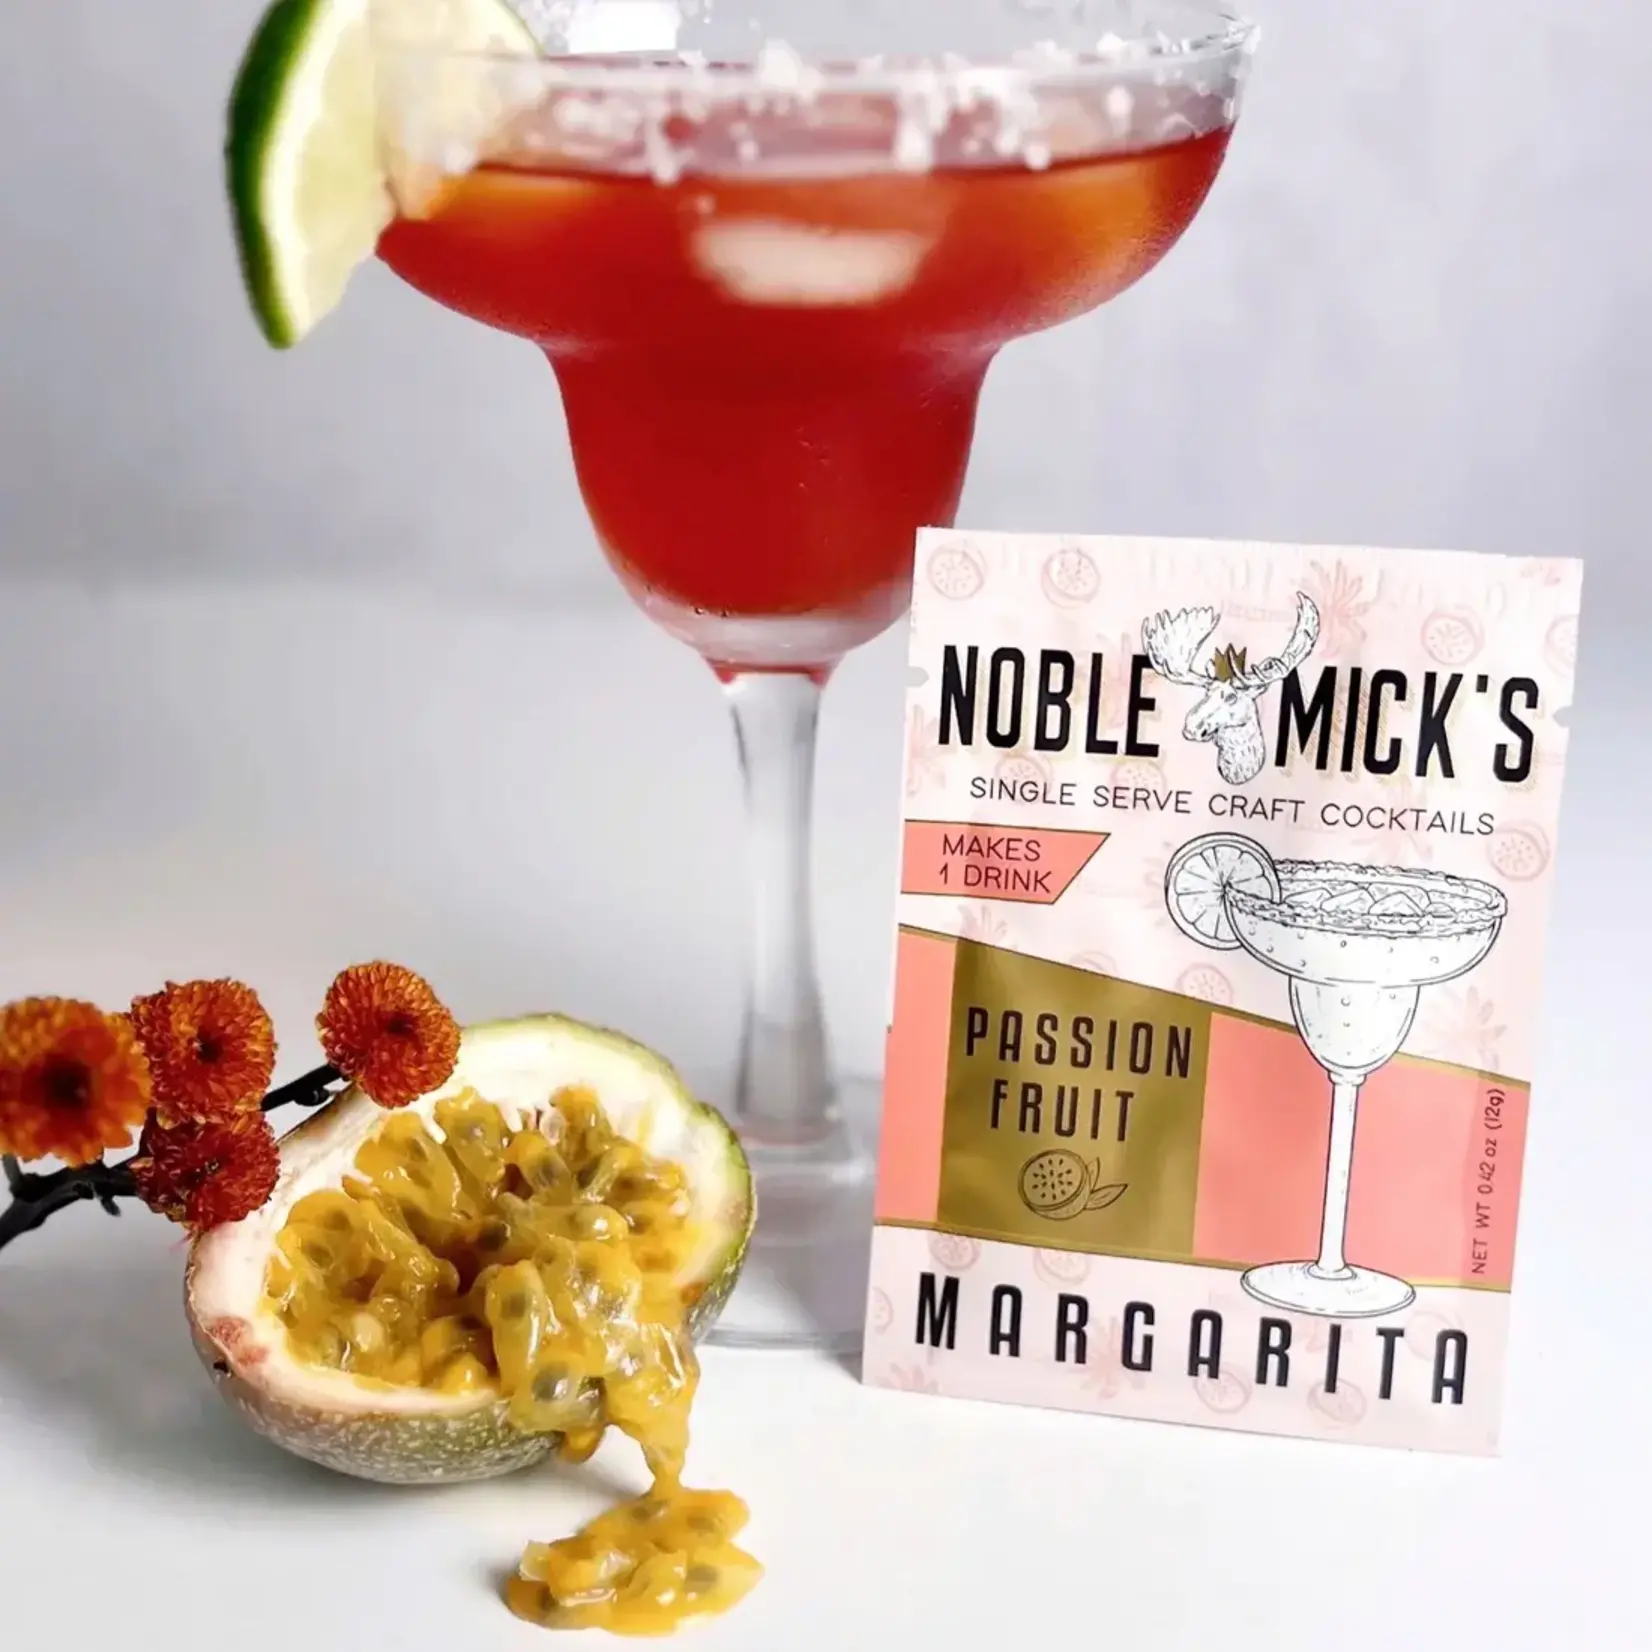 Noble Mick's Noble Mick's Passion Fruit Margarita